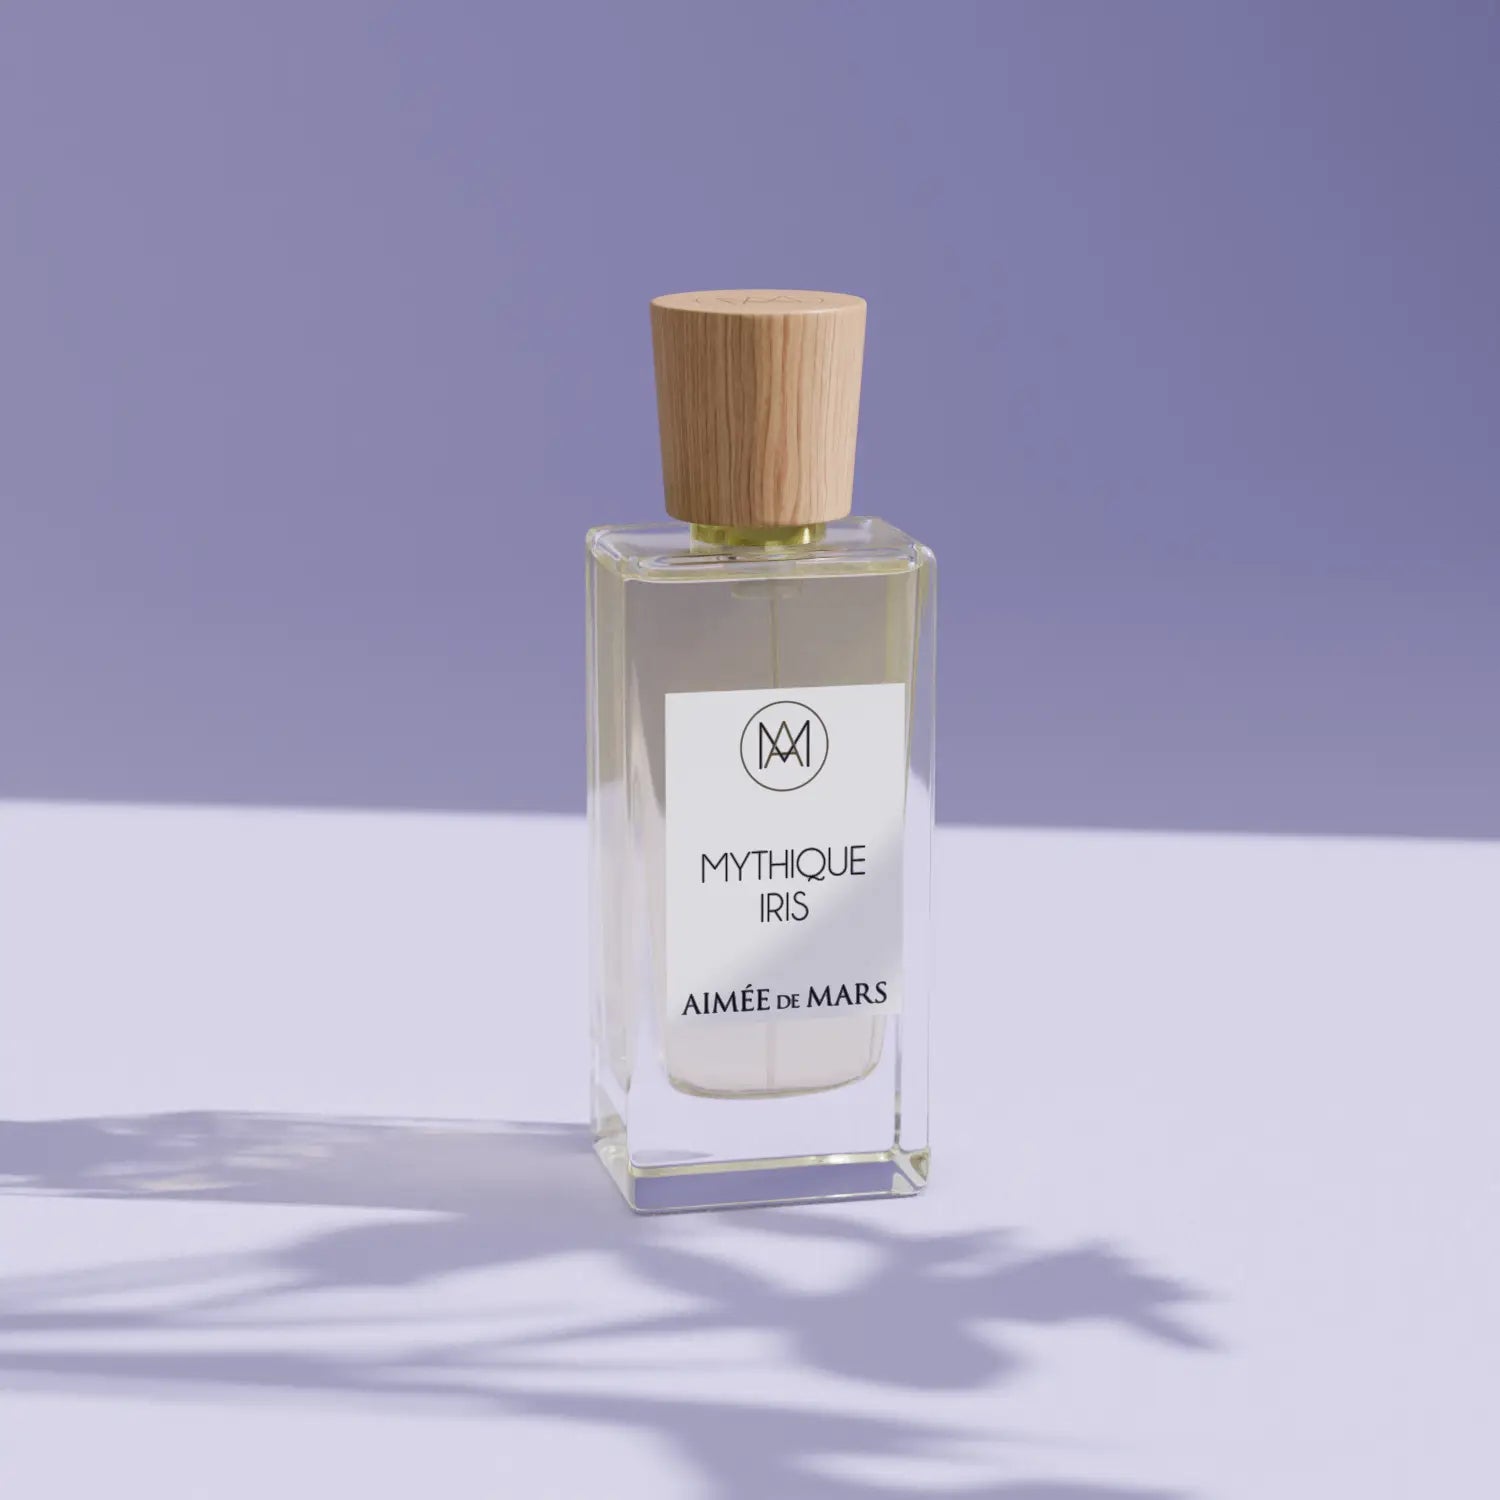 Mythique Iris fragrance